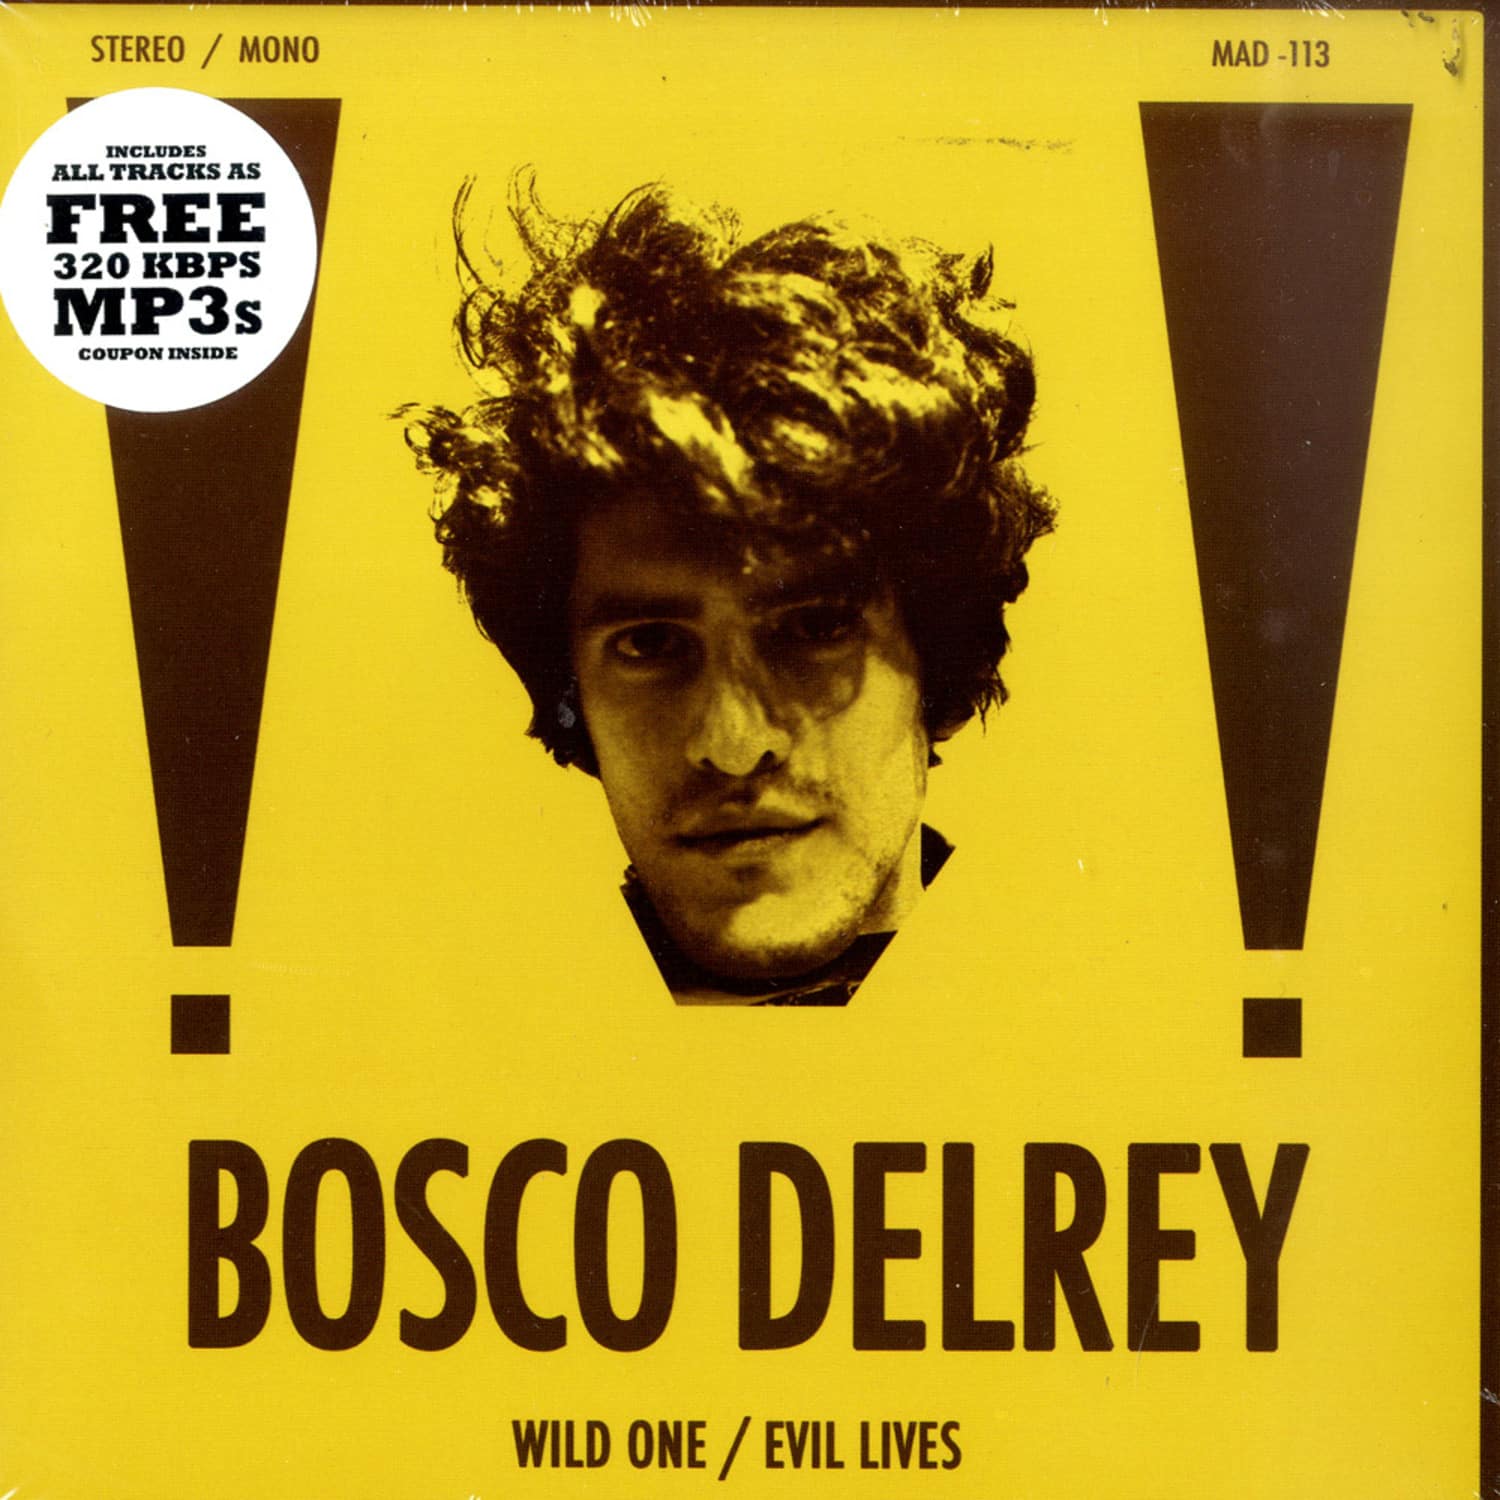 Bosco Delrey - WILD ONE / EVIL LIES 